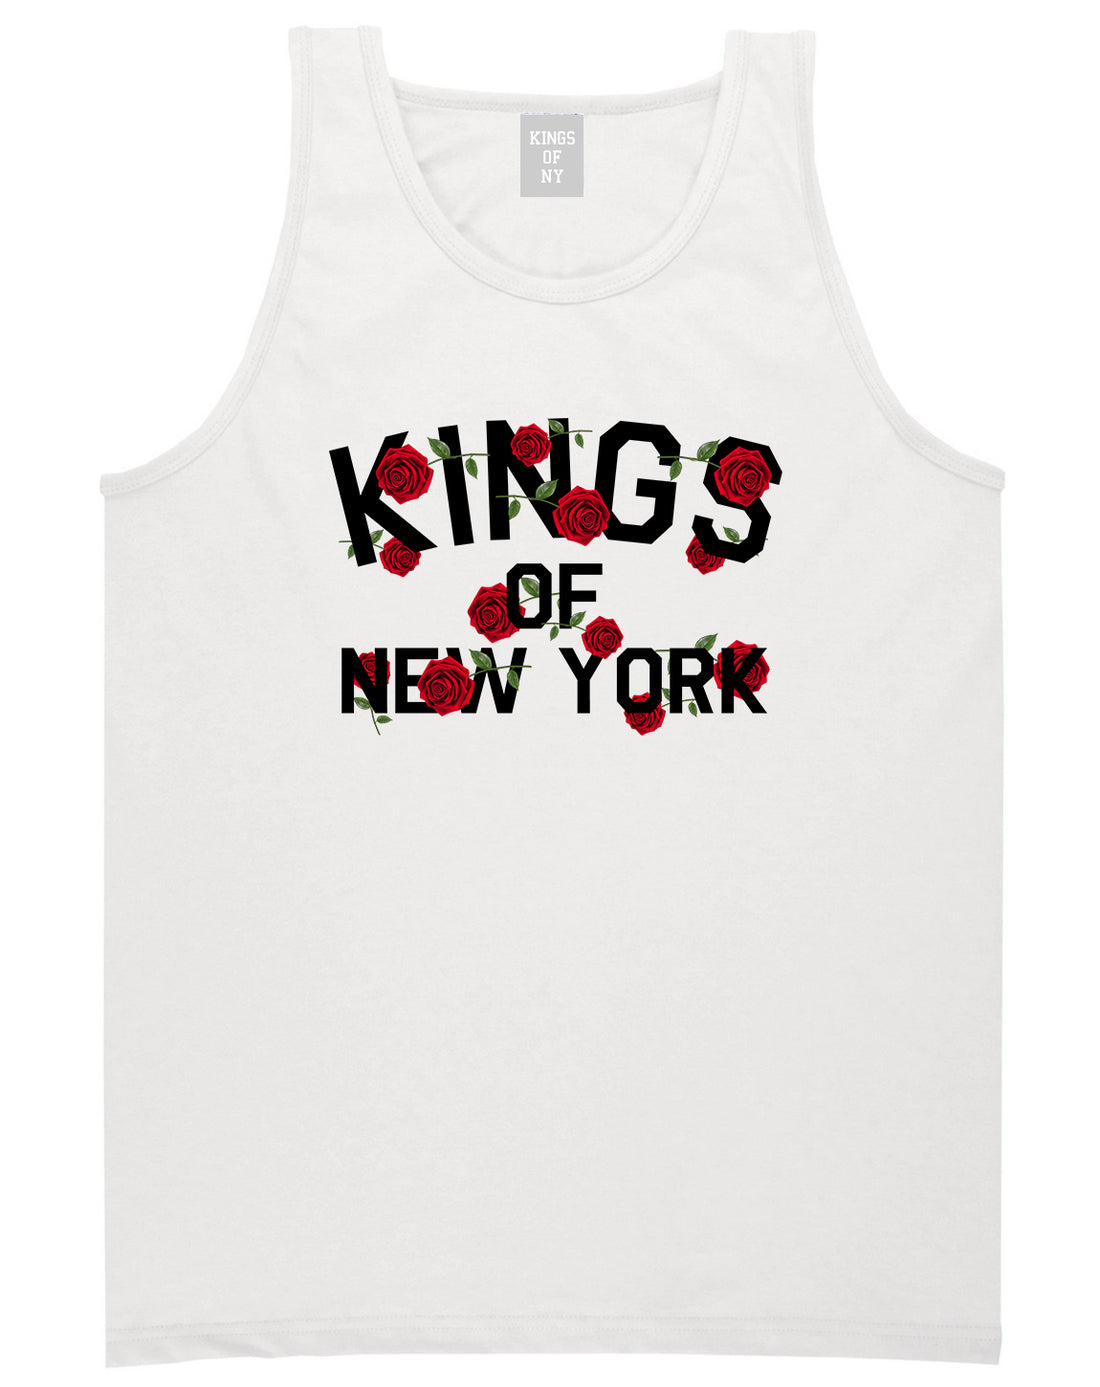 Kings Of New York Rose Garland Tank Top Shirt in White